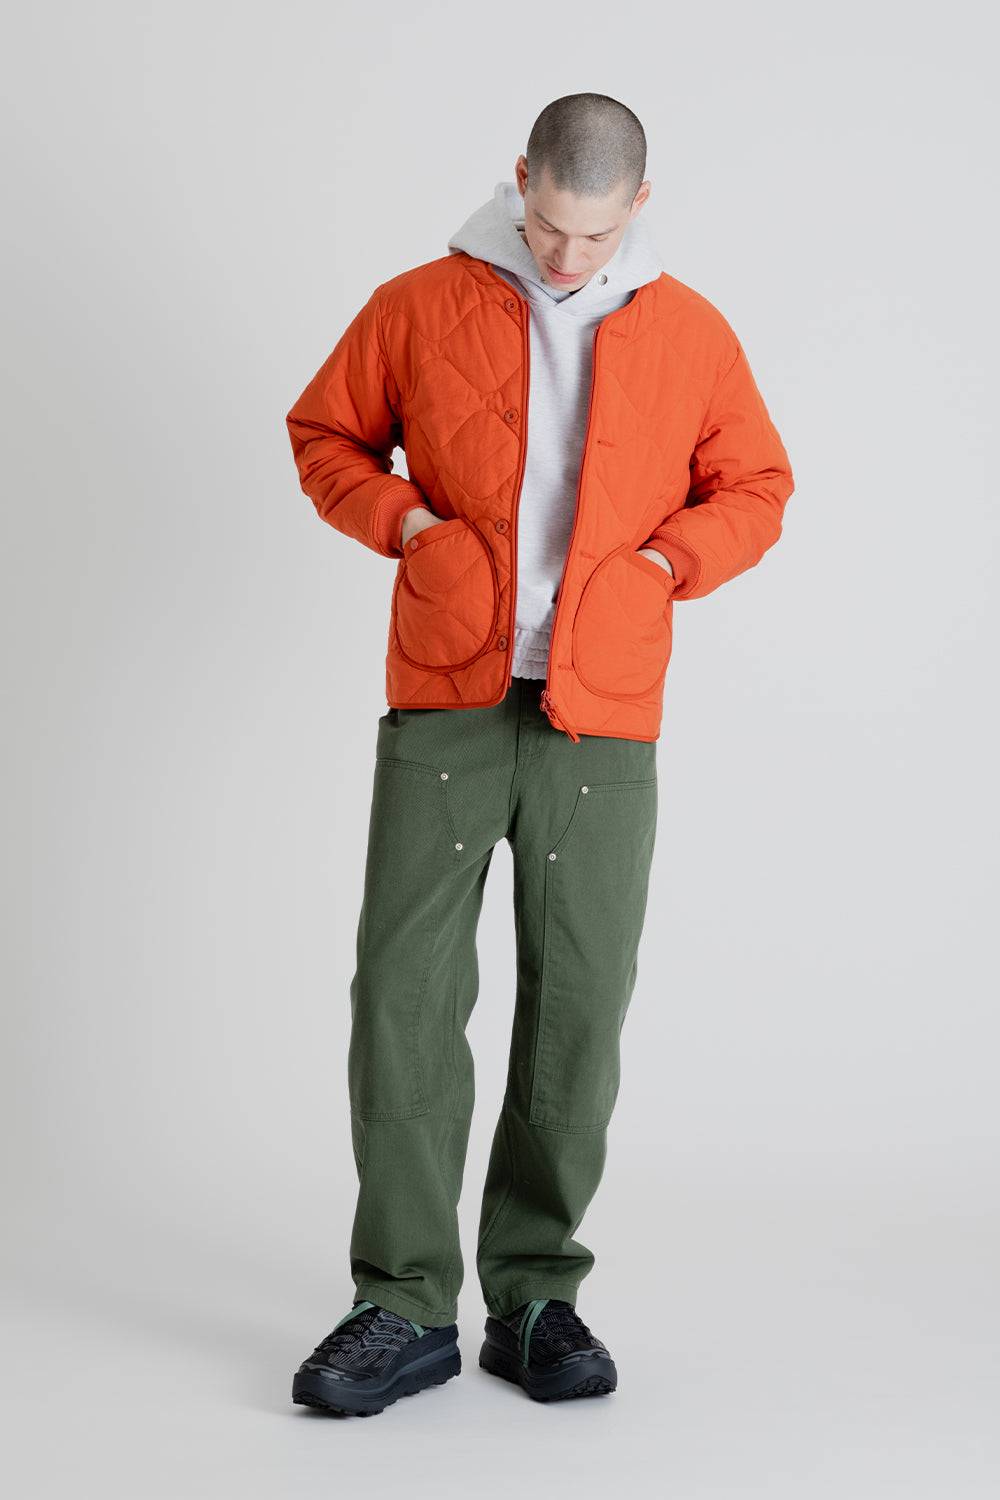 Frizmworks M1965 Field Liner Jacket in Orange